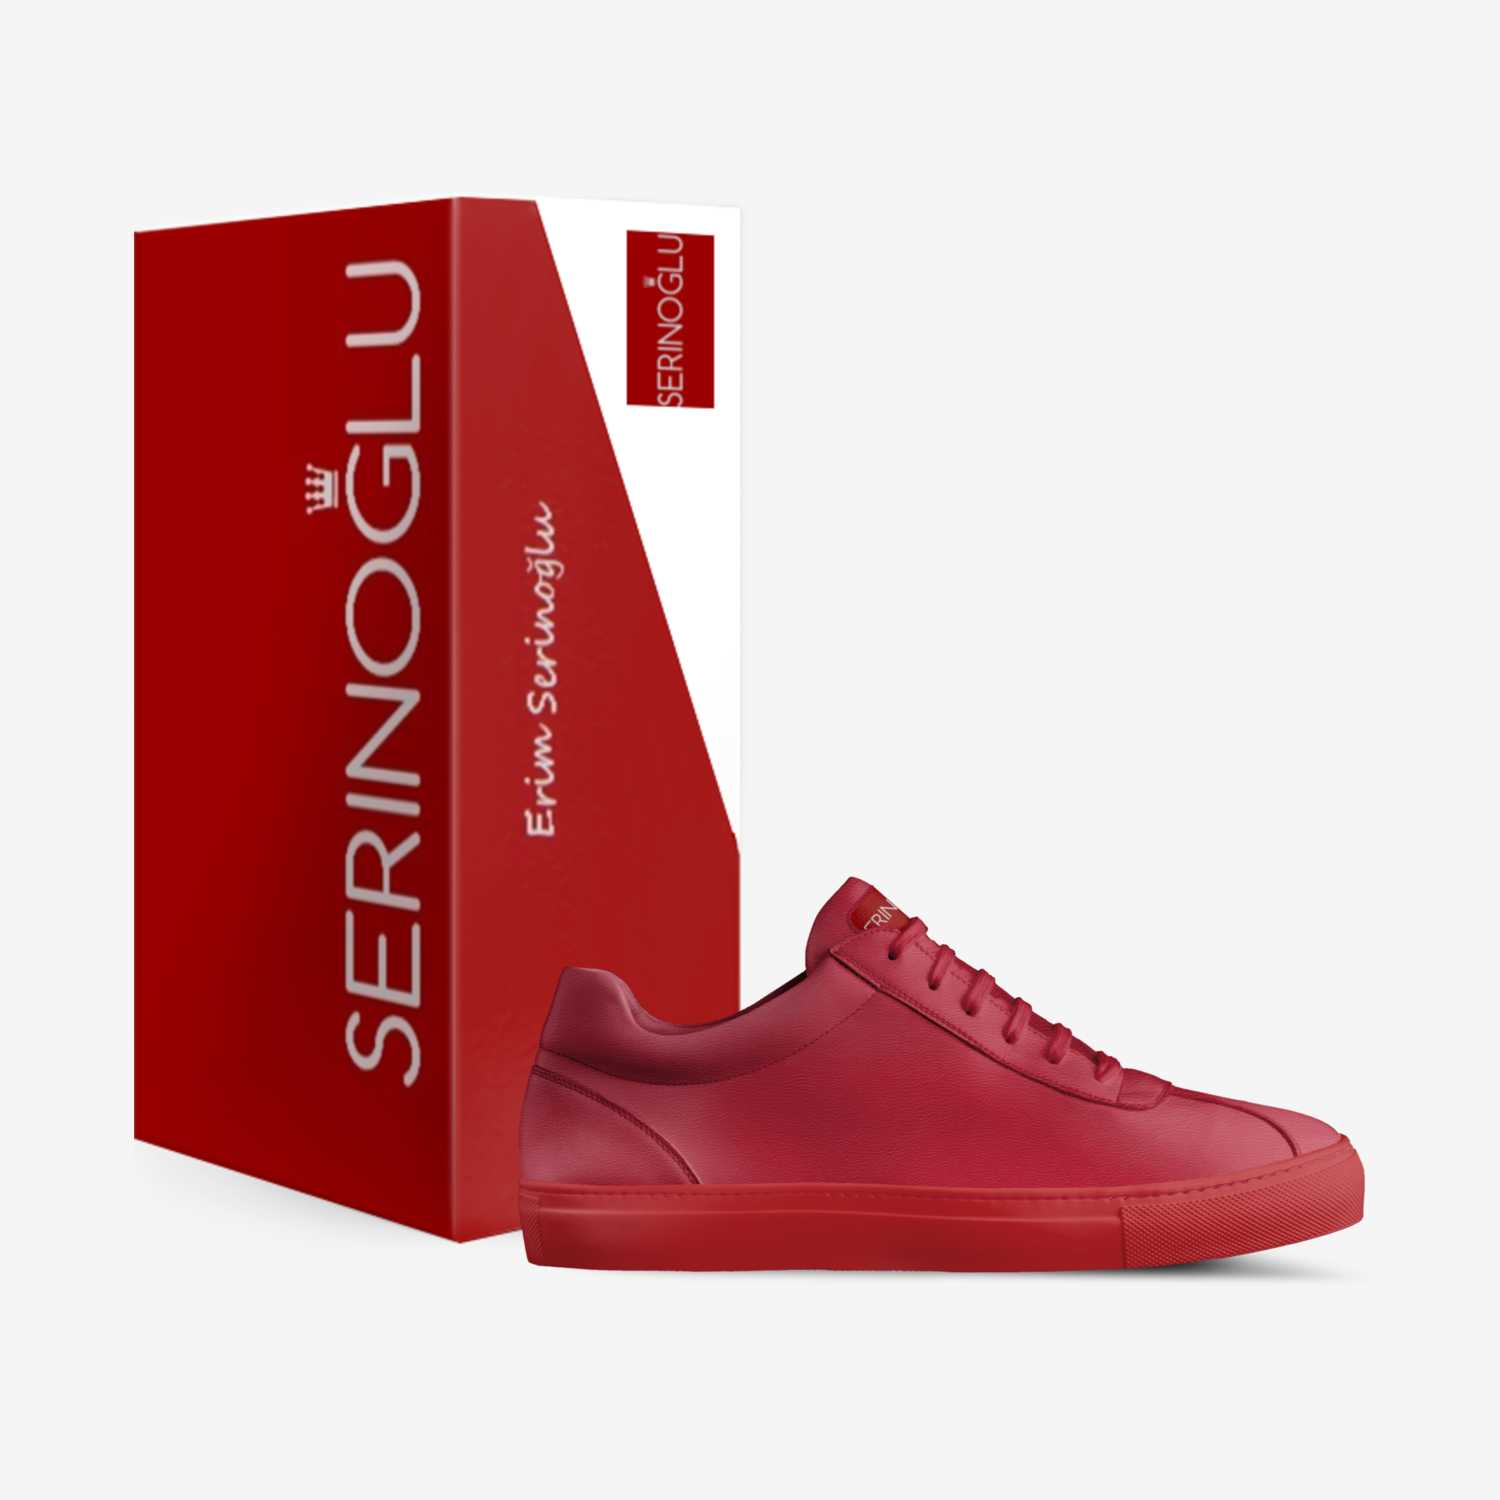 Serinoğlu custom made in Italy shoes by Erim Serinoglu | Box view